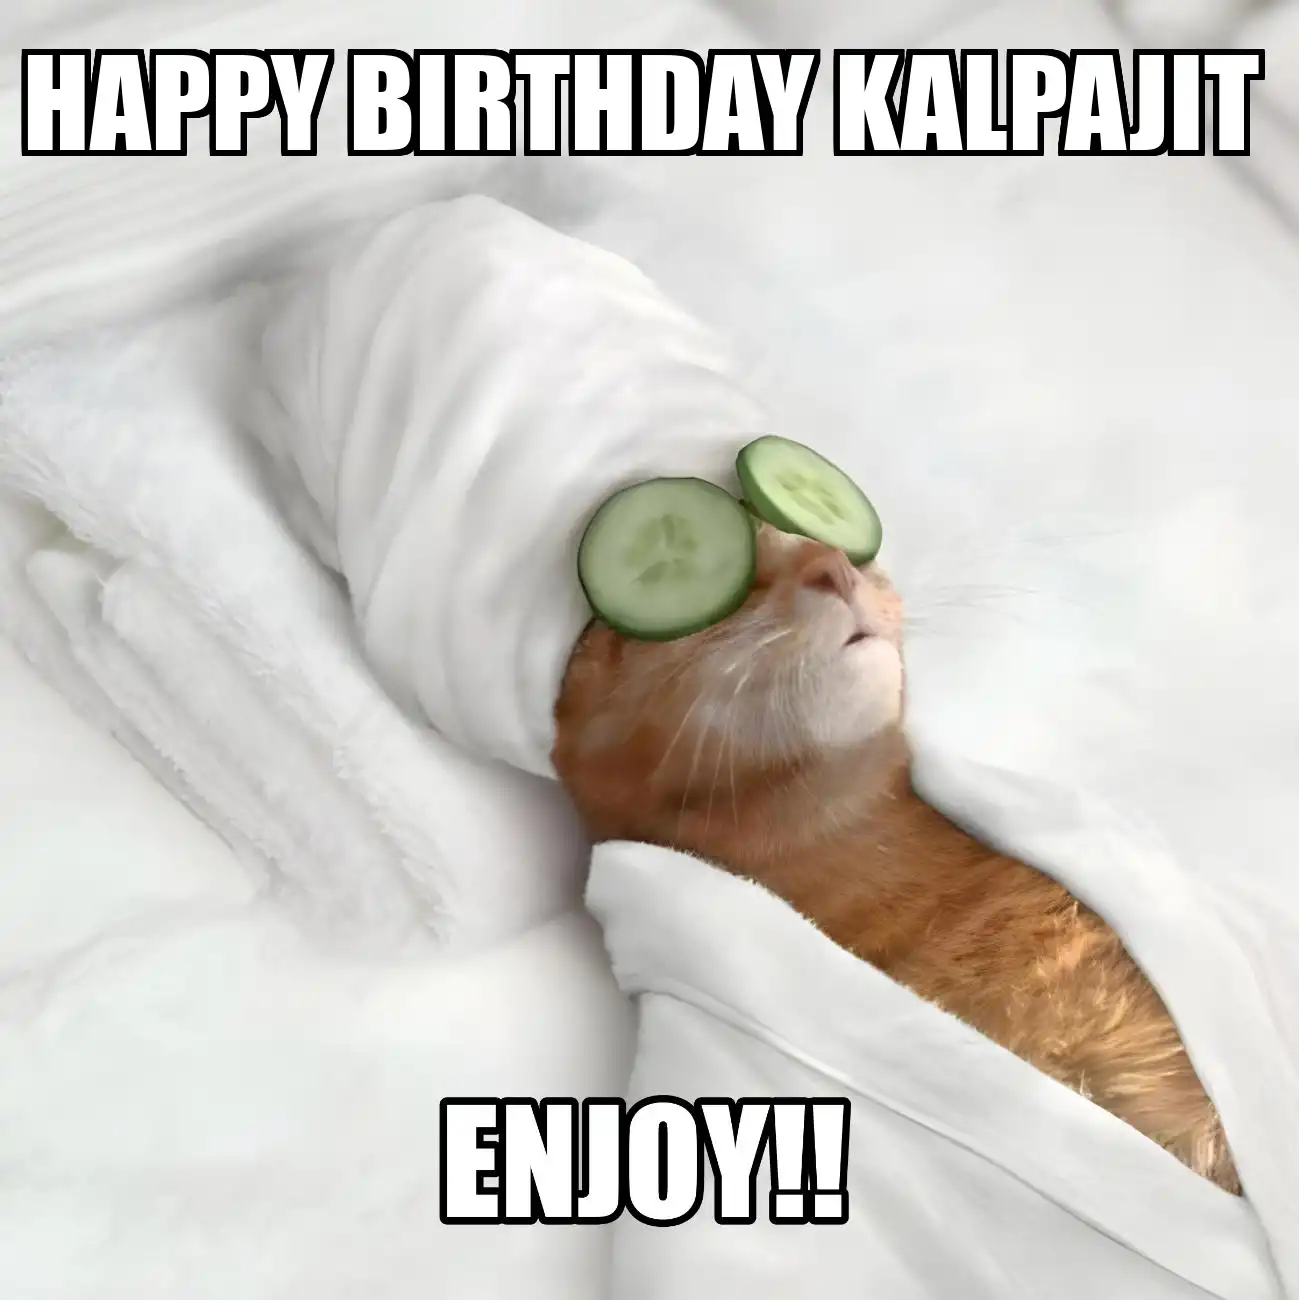 Happy Birthday Kalpajit Enjoy Cat Meme